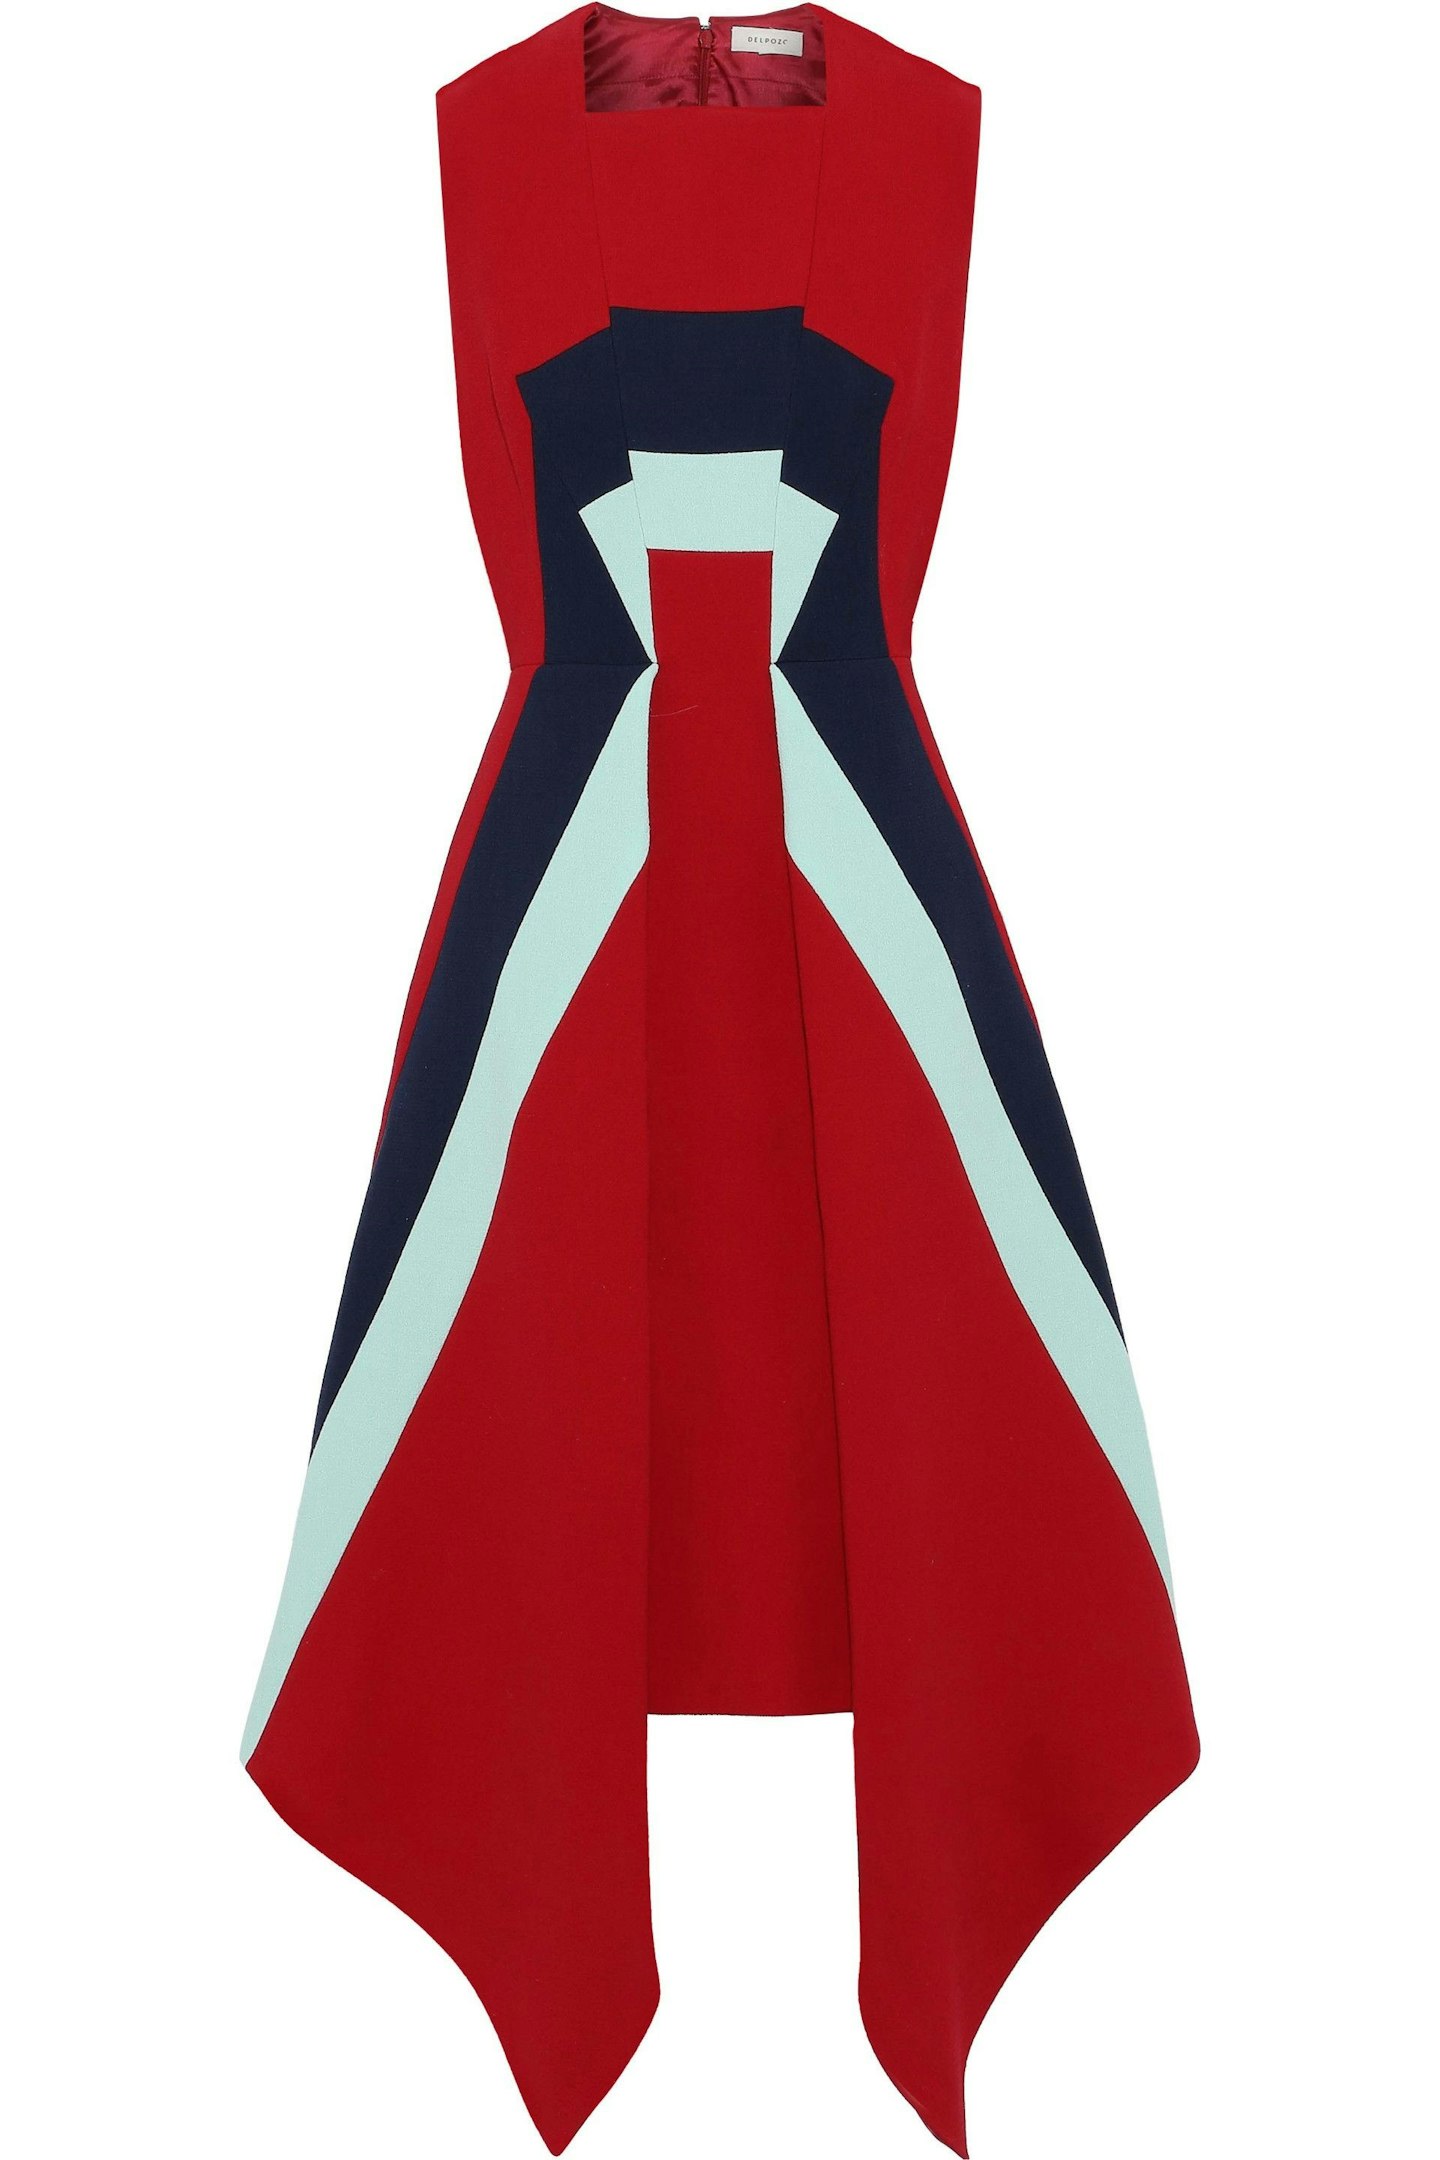 Delpozo, Sleeveless Midi Dress, £1,155